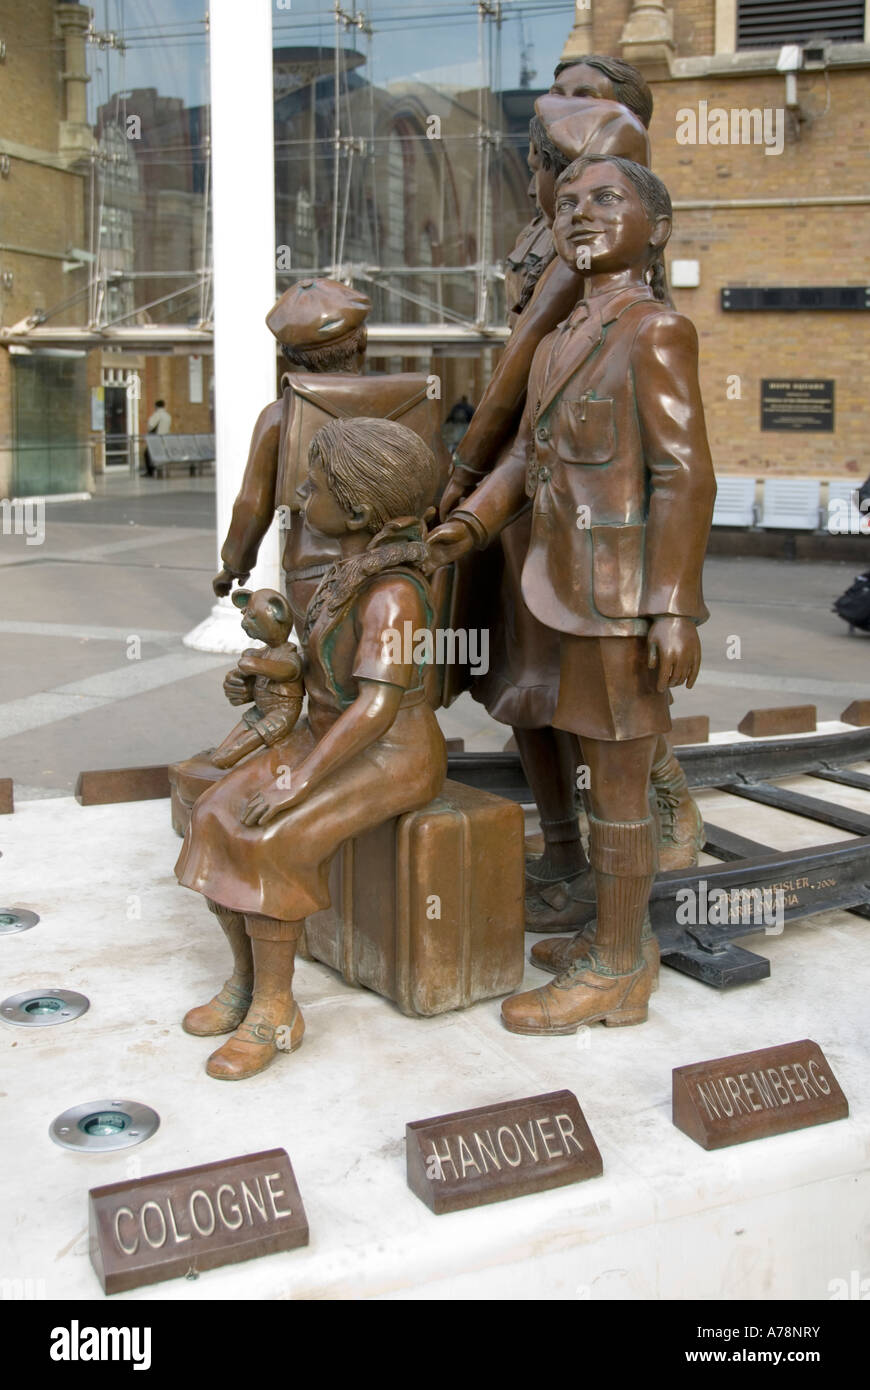 Kindertransport Memorial by Frank Meisler outside London train station Stock Photo